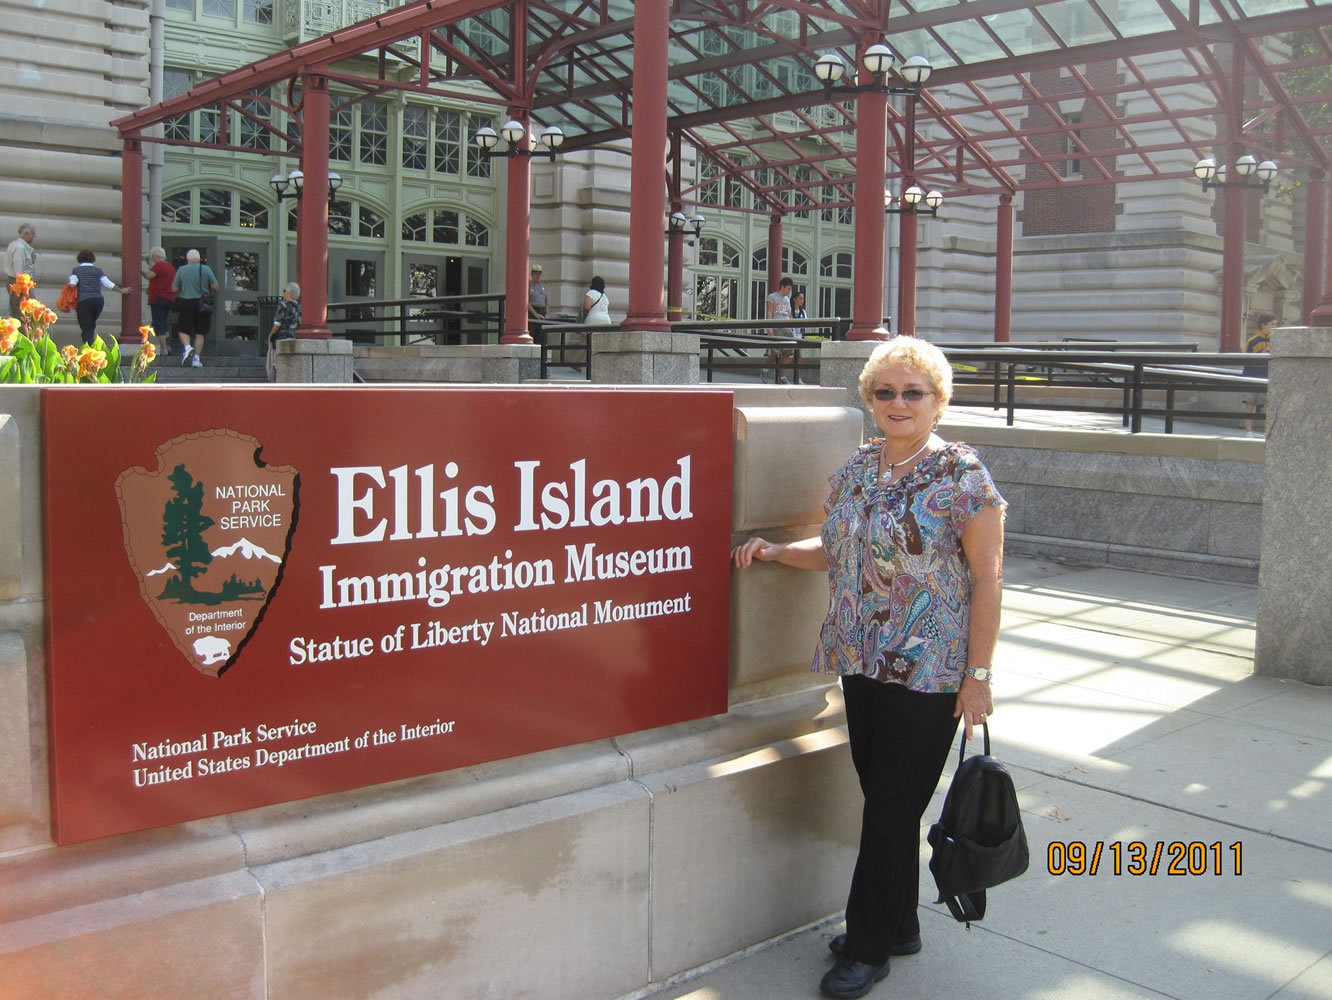 Revisiting Ellis Island in September 2011.